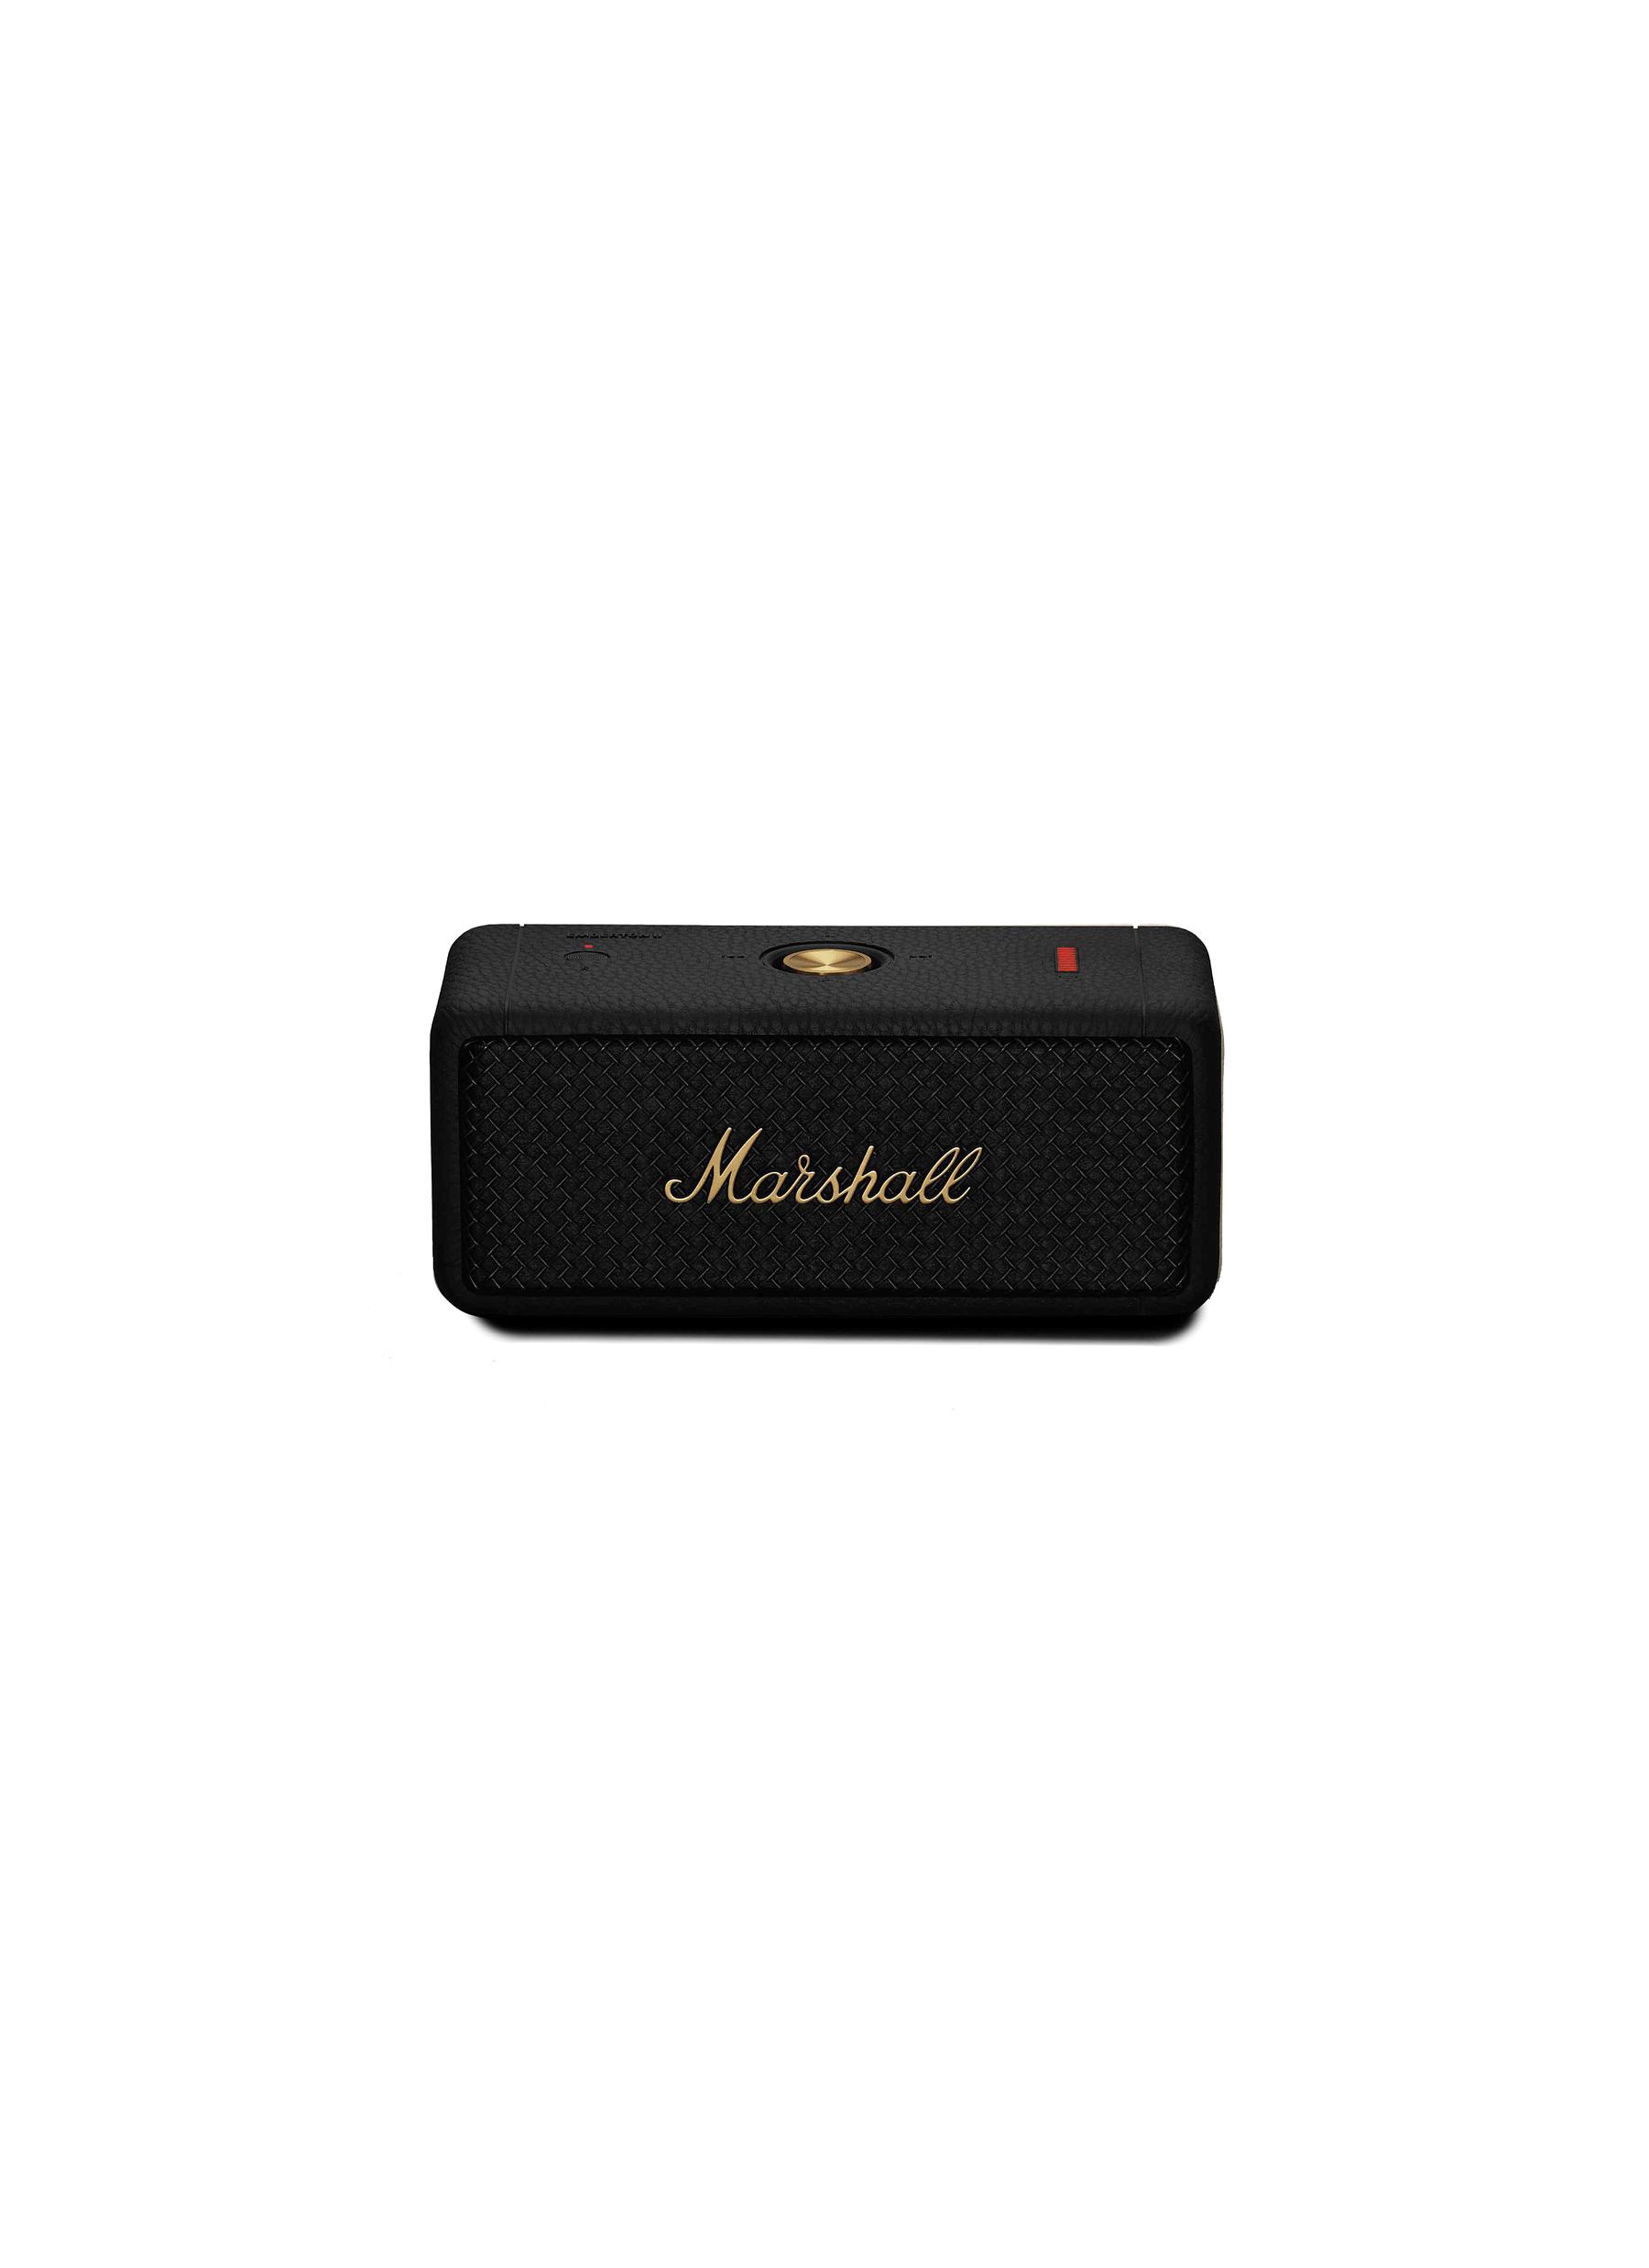 Marshall Emberton Ii Wireless Bluetooth Speaker - Black